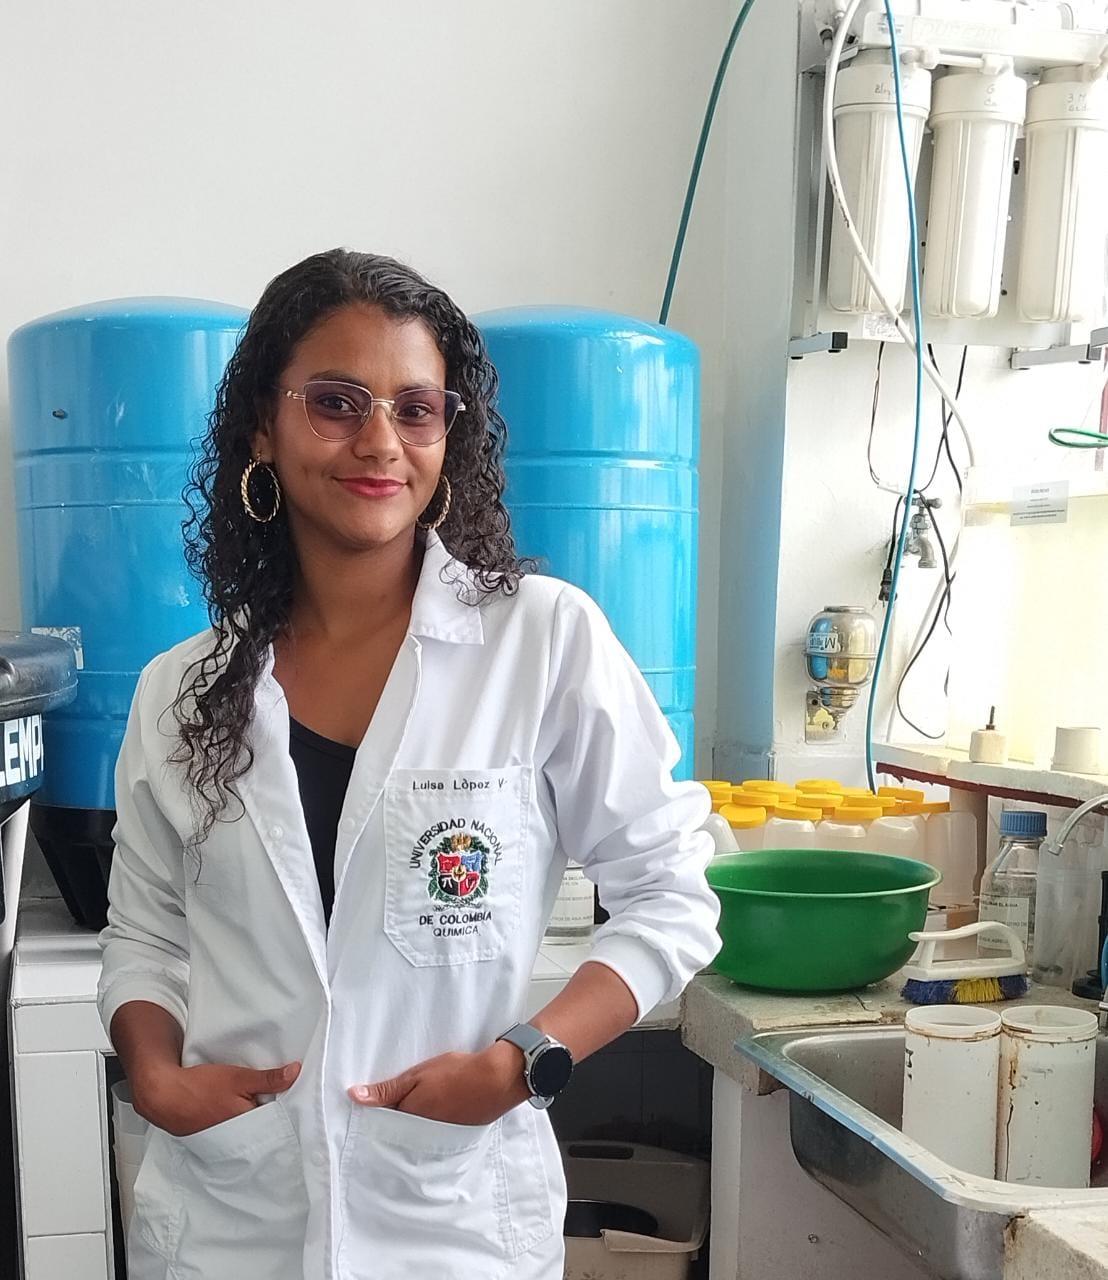 Camila López, Chemiestudentin, im Labor. (c) Privat